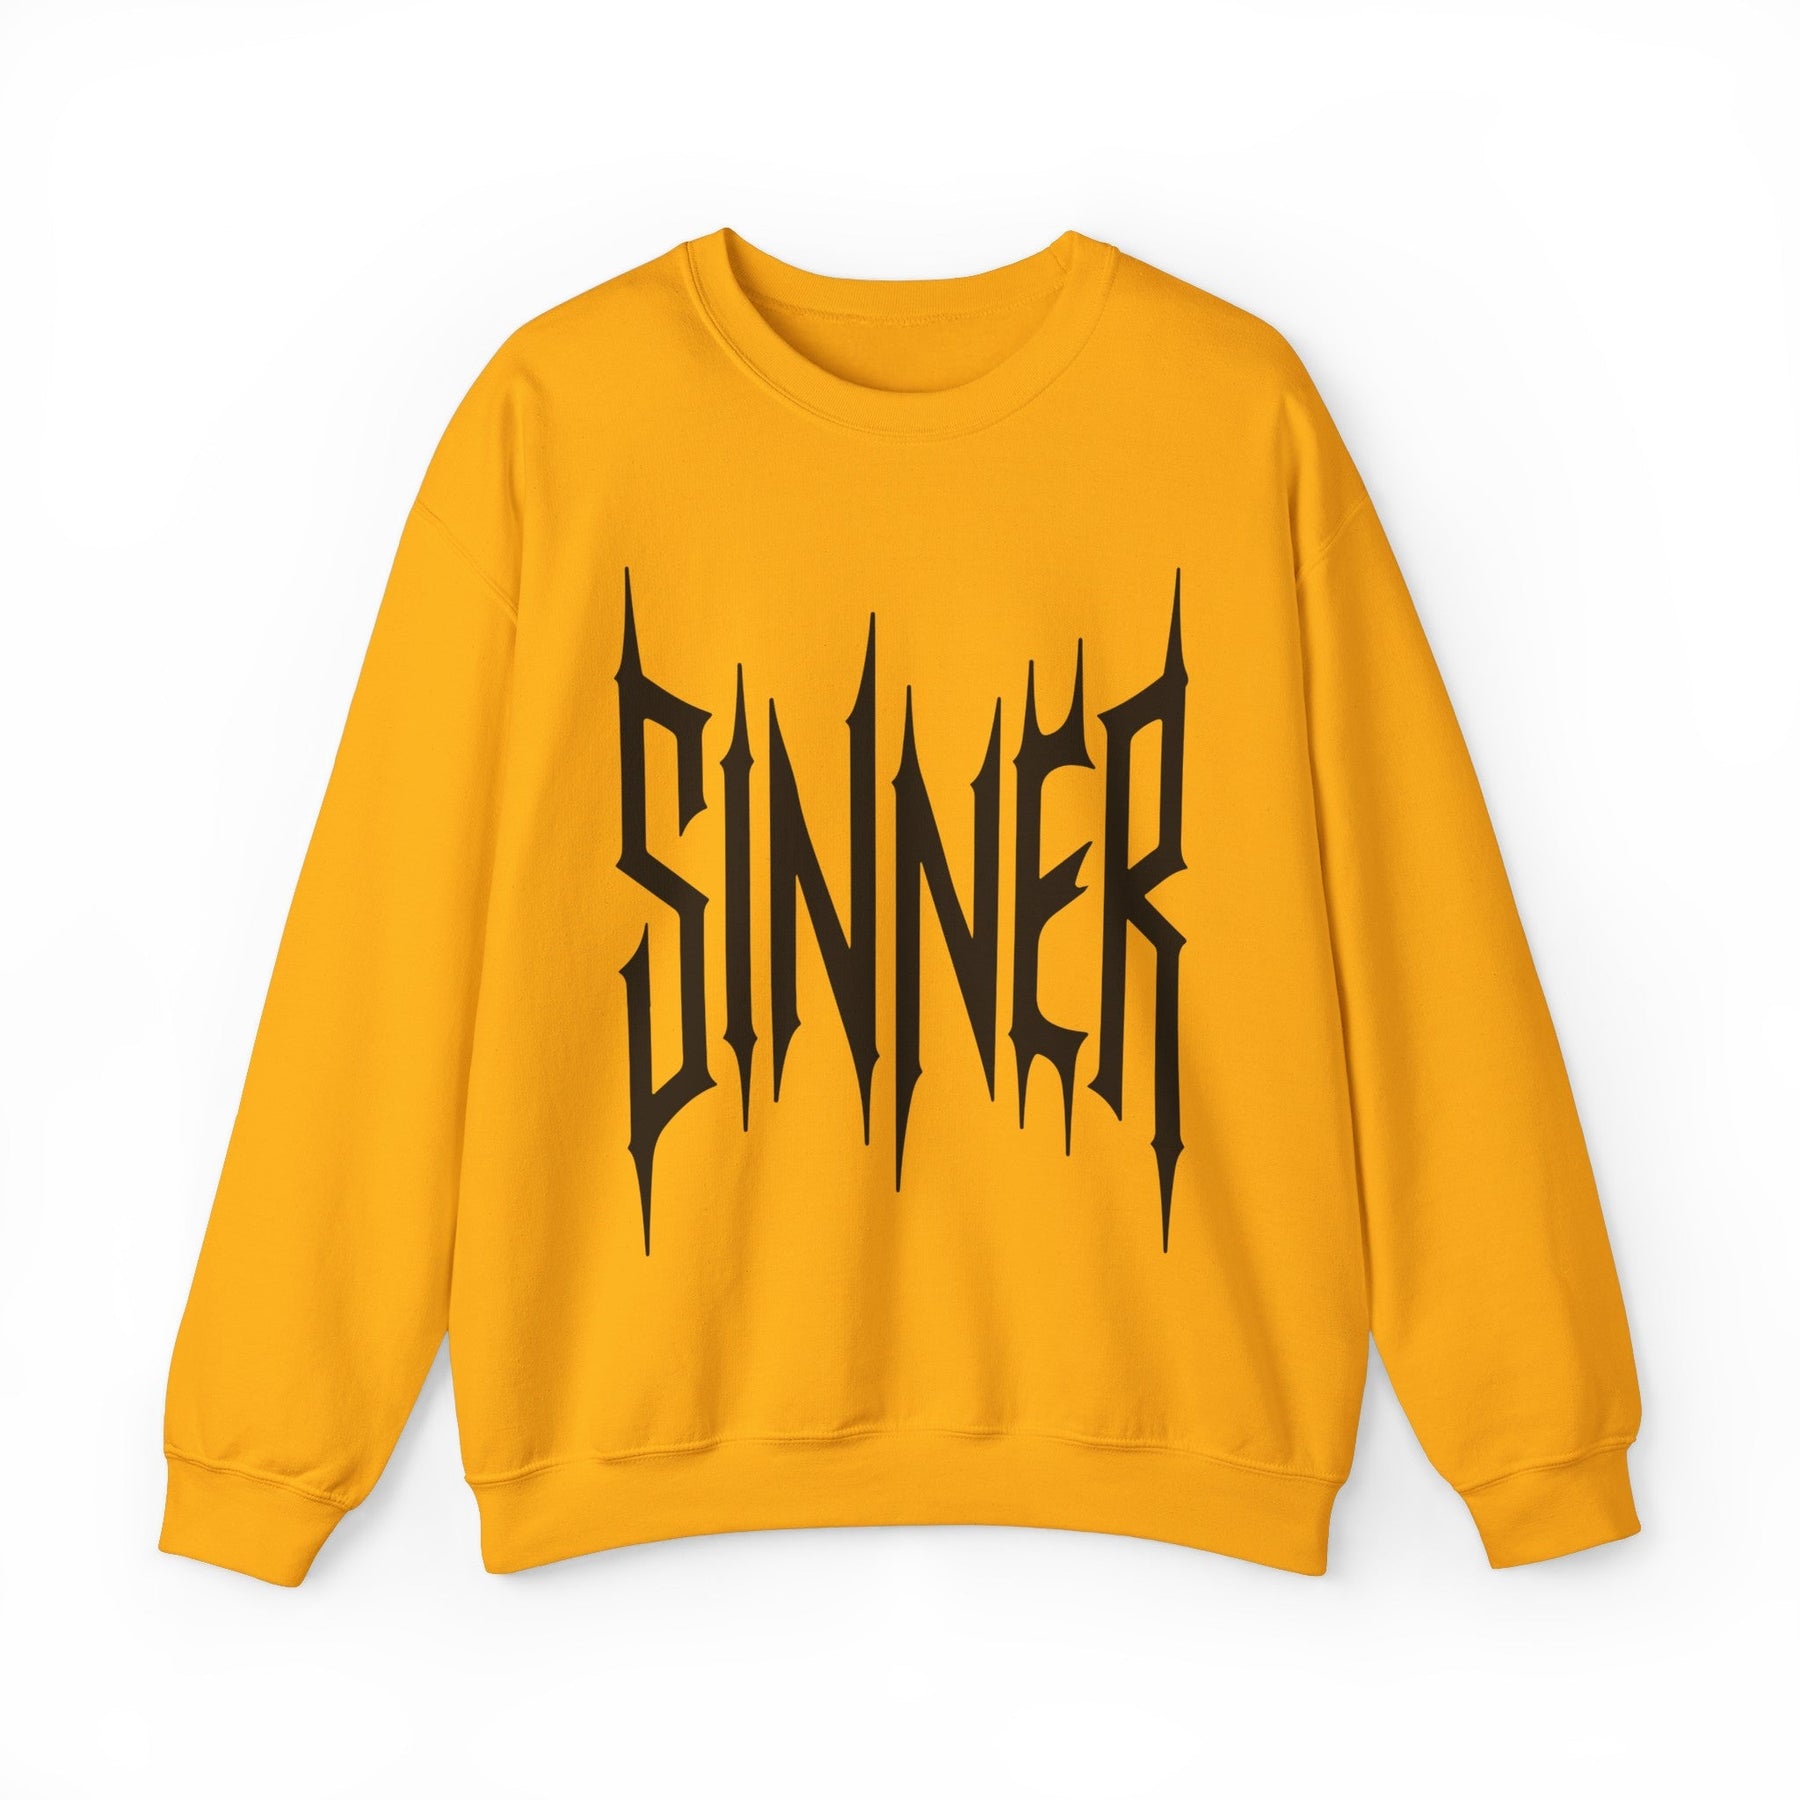 Sinner Unisex Sweatshirt - Goth Cloth Co.Sweatshirt26393909678813567838